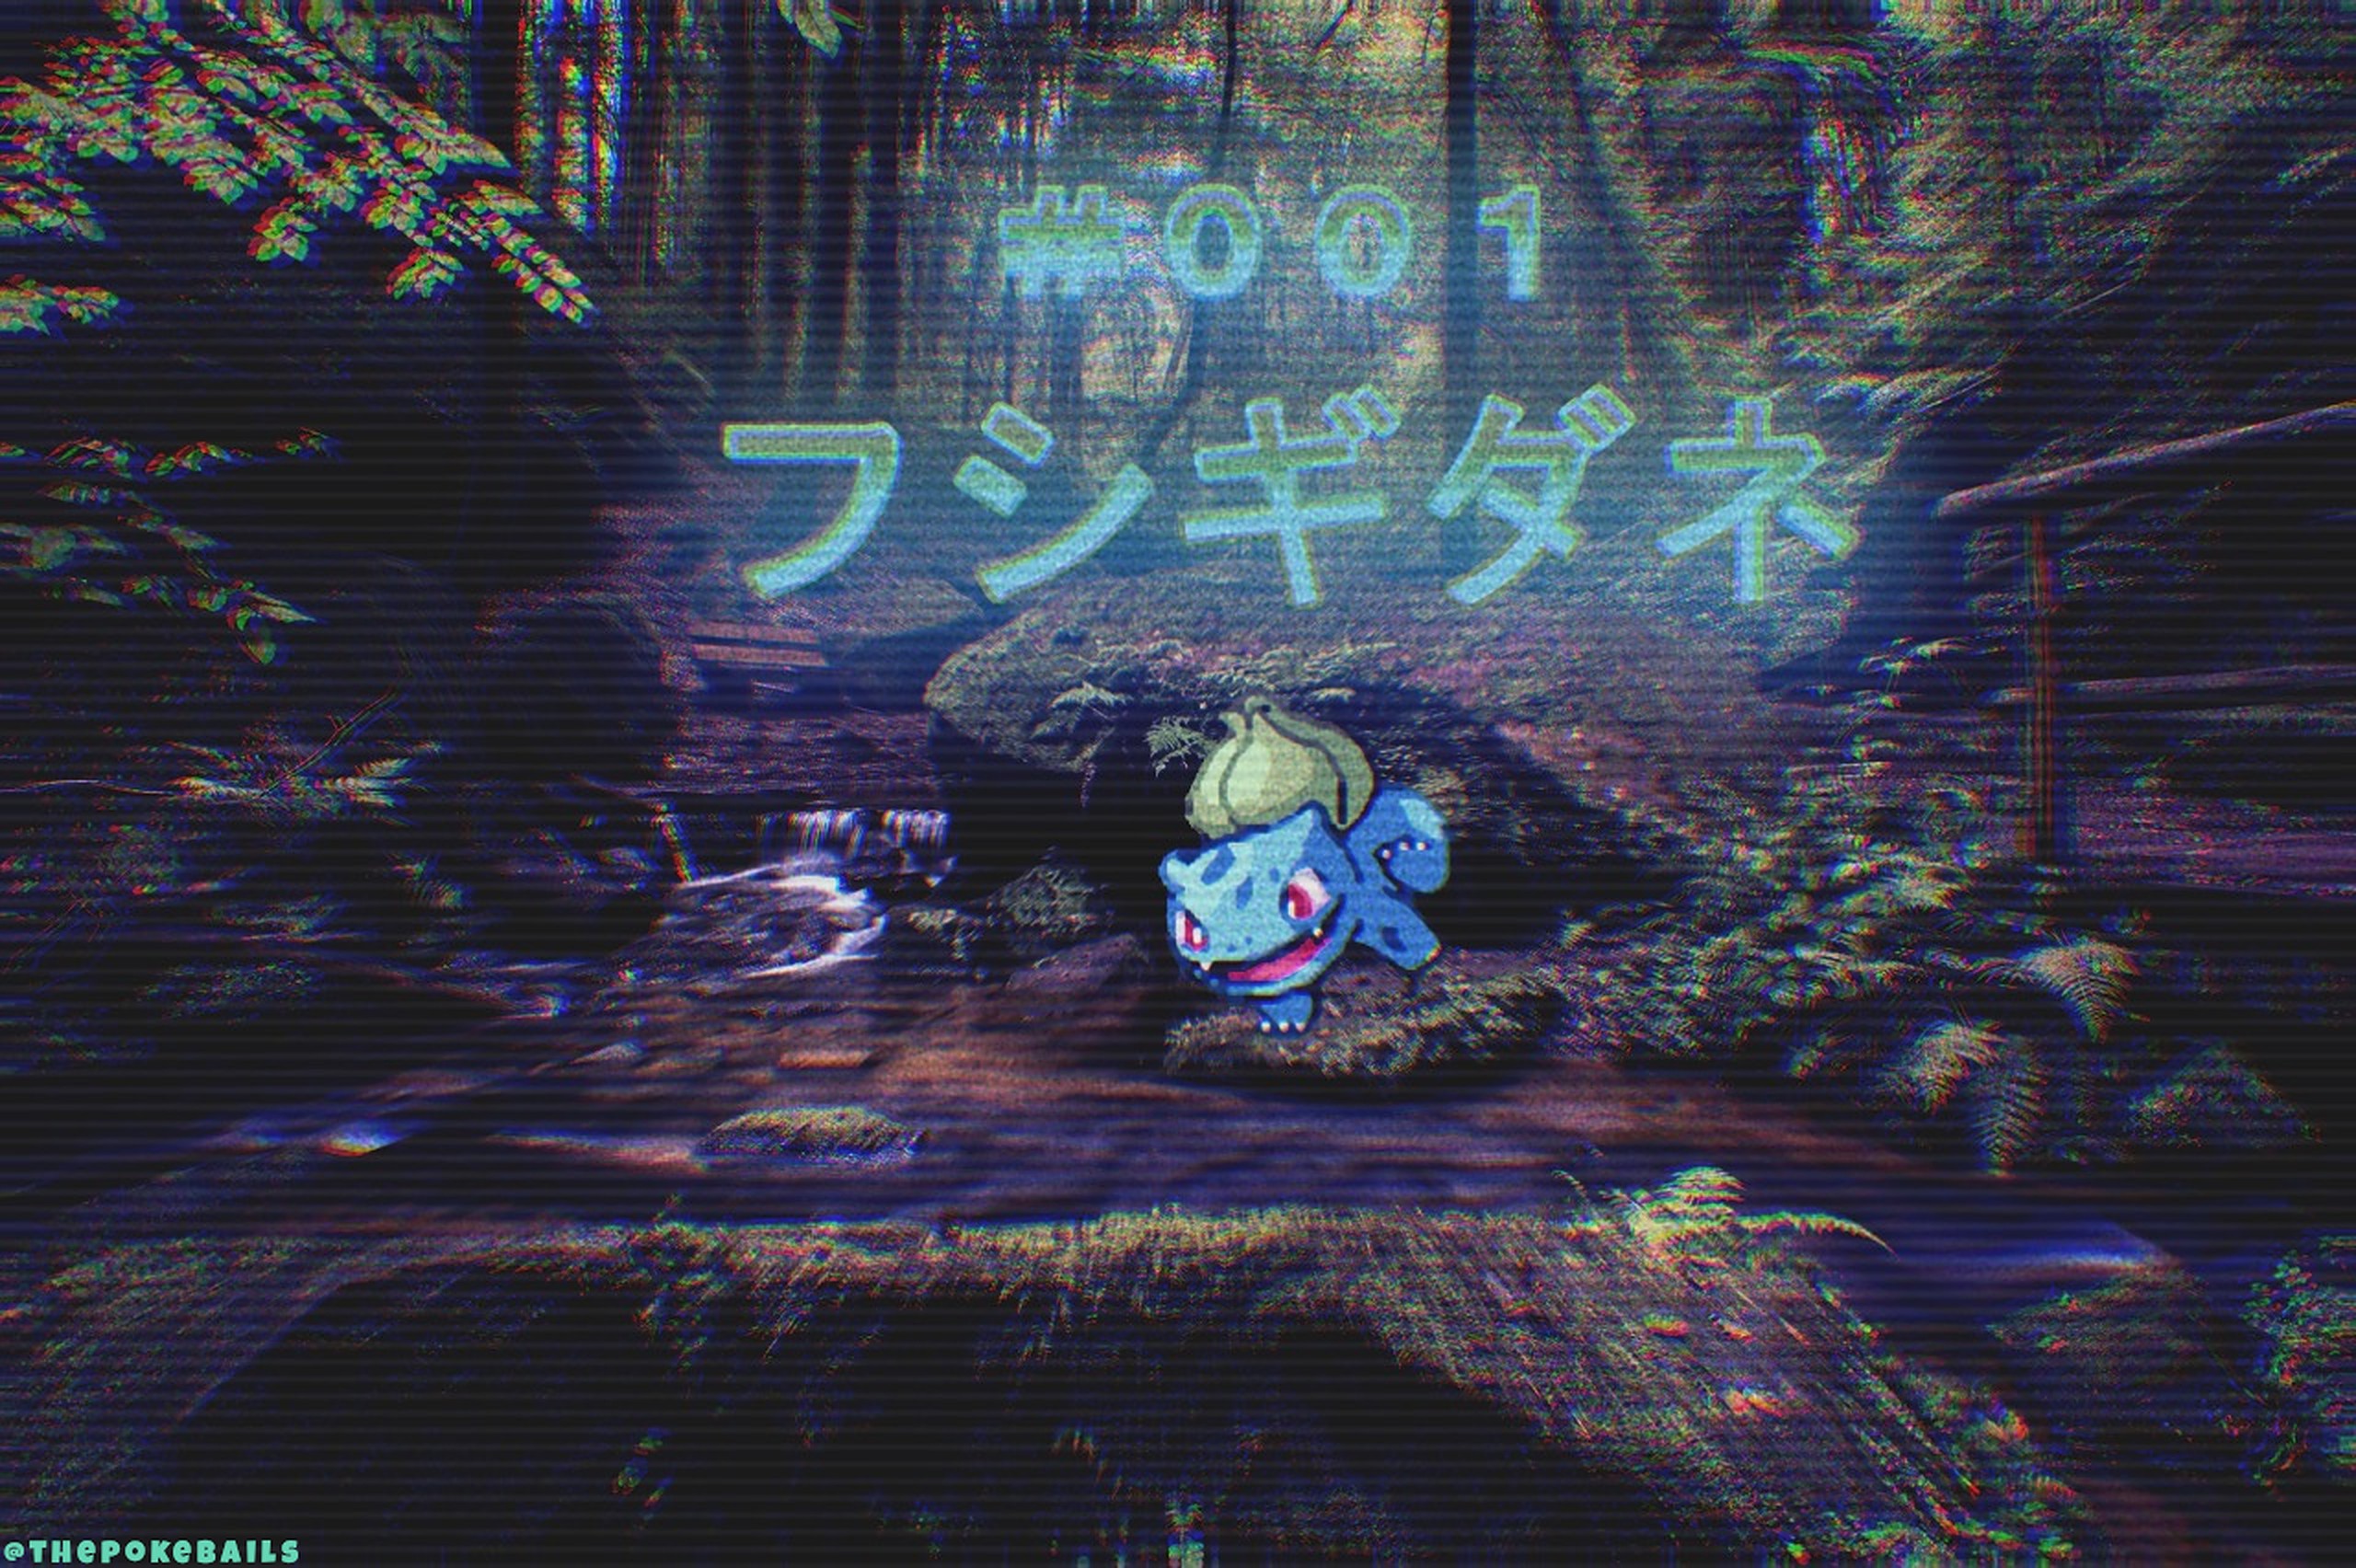 Anime 2560x1704 Pokémon Bulbasaur vaporwave forest stream nature landscape trees moss Pokemon Go Japanese katakana anime